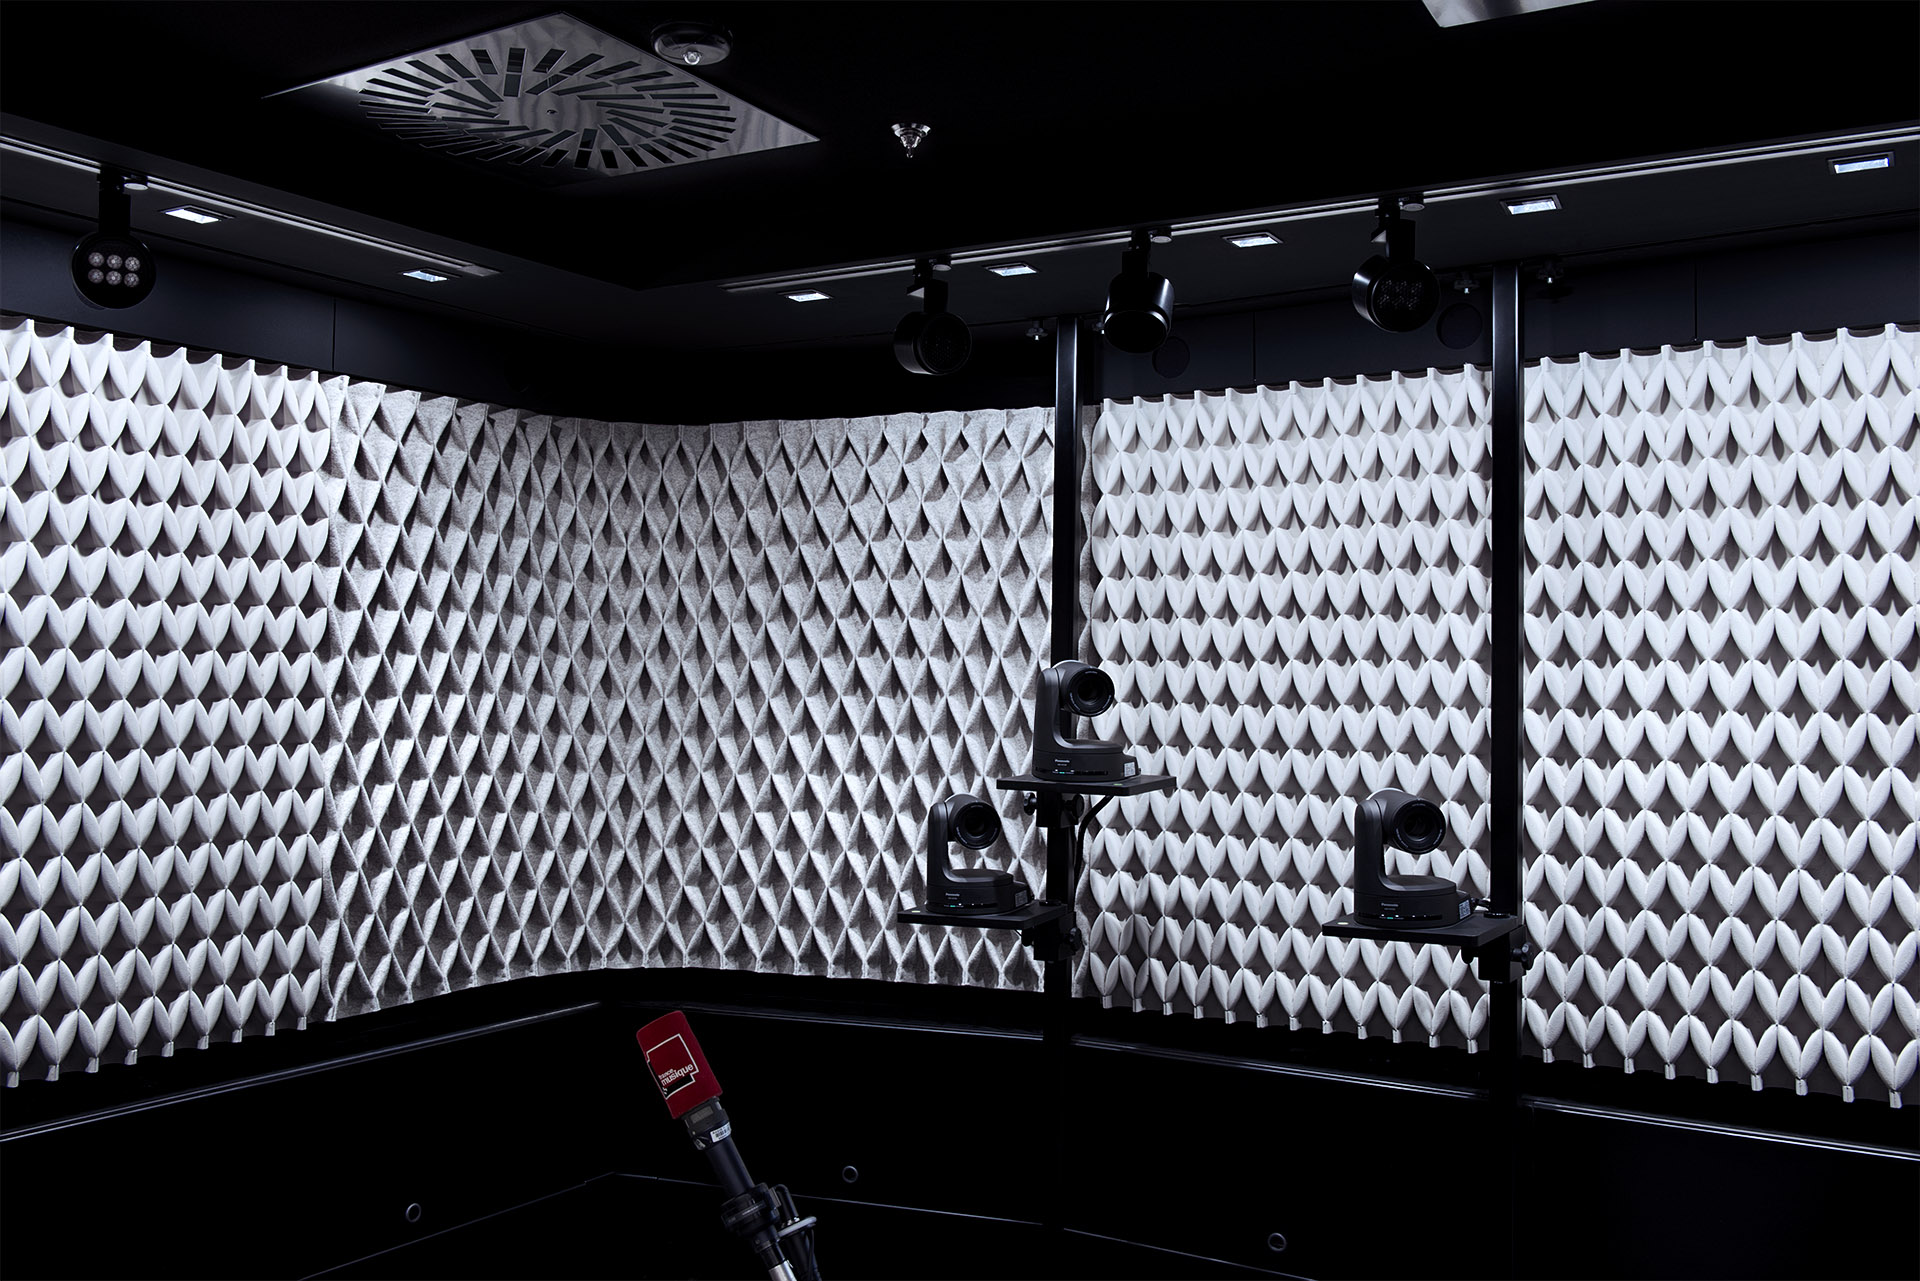 06 Studio 451 - Nolwenn Le Scao interior design for Radio France - France Musique studio - Clement Blanchet Architecture